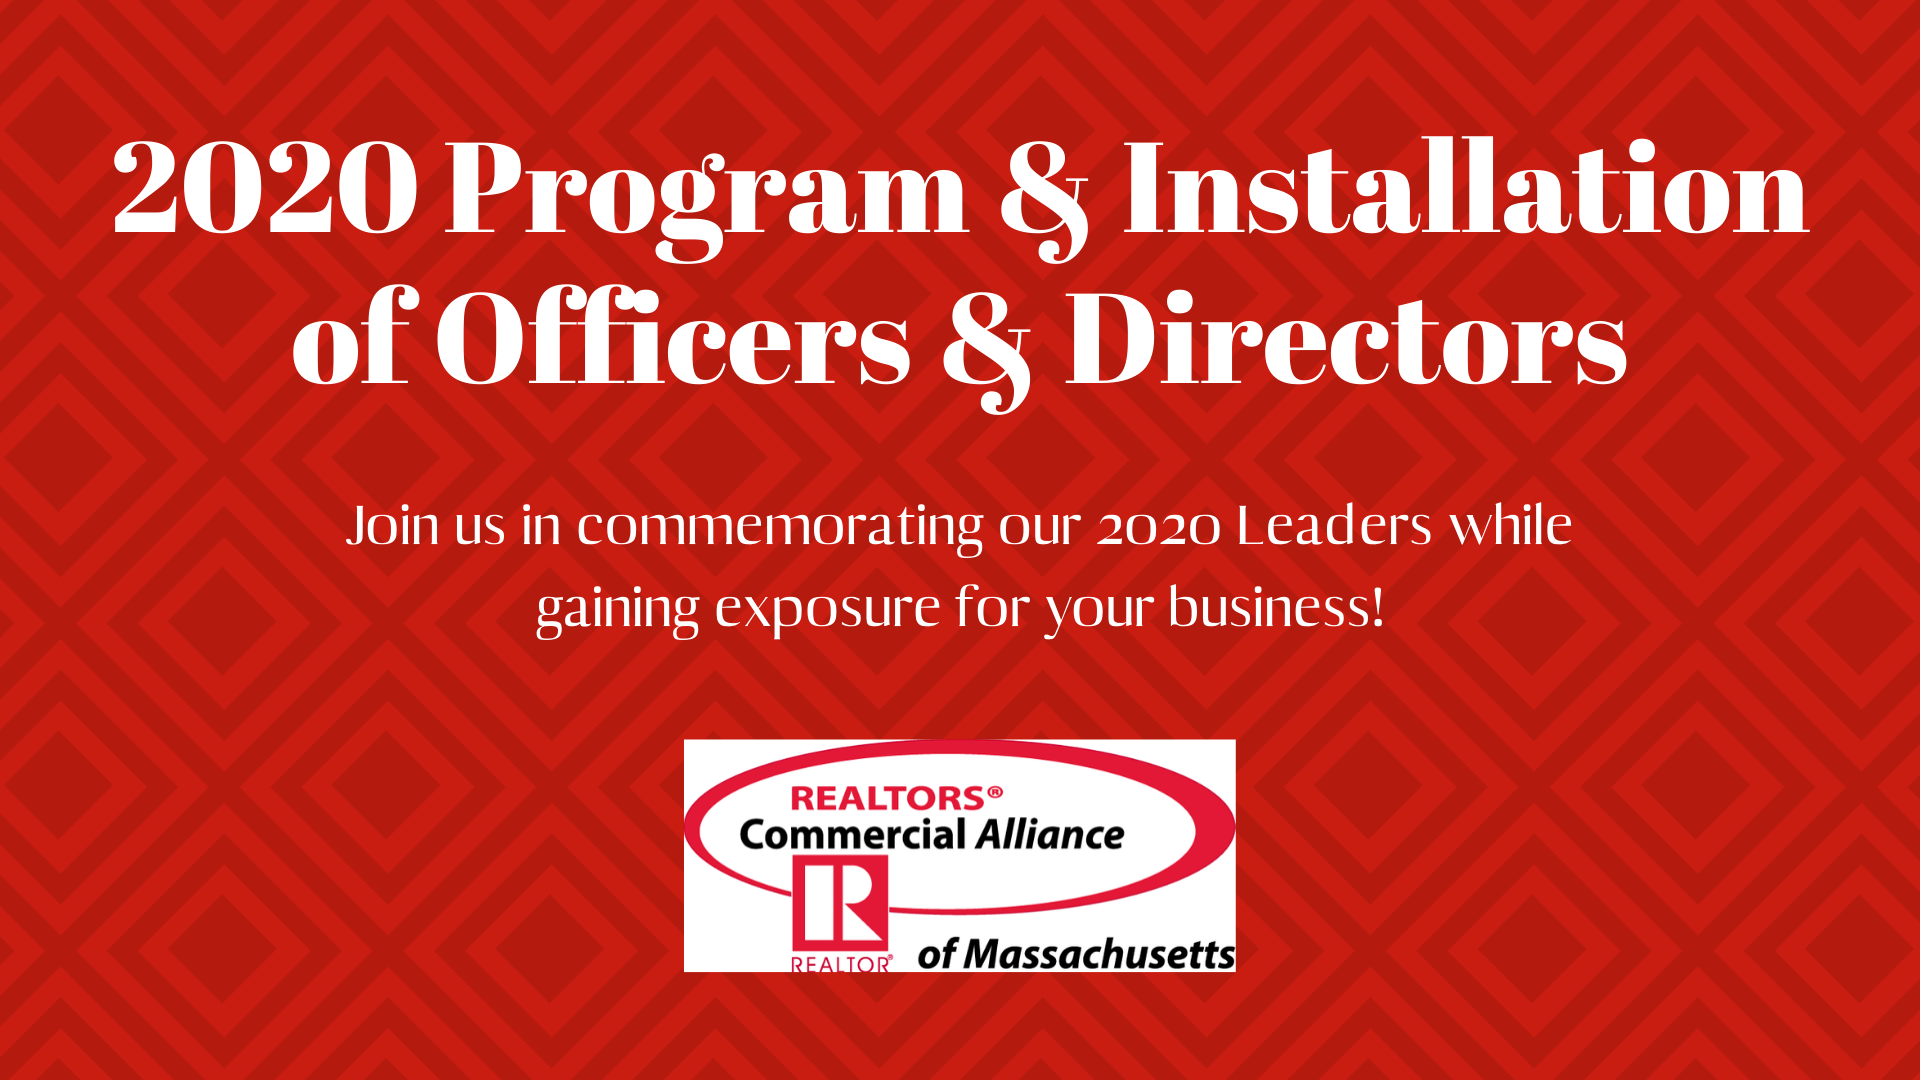 2020 Program & Installation of Officers & Directors